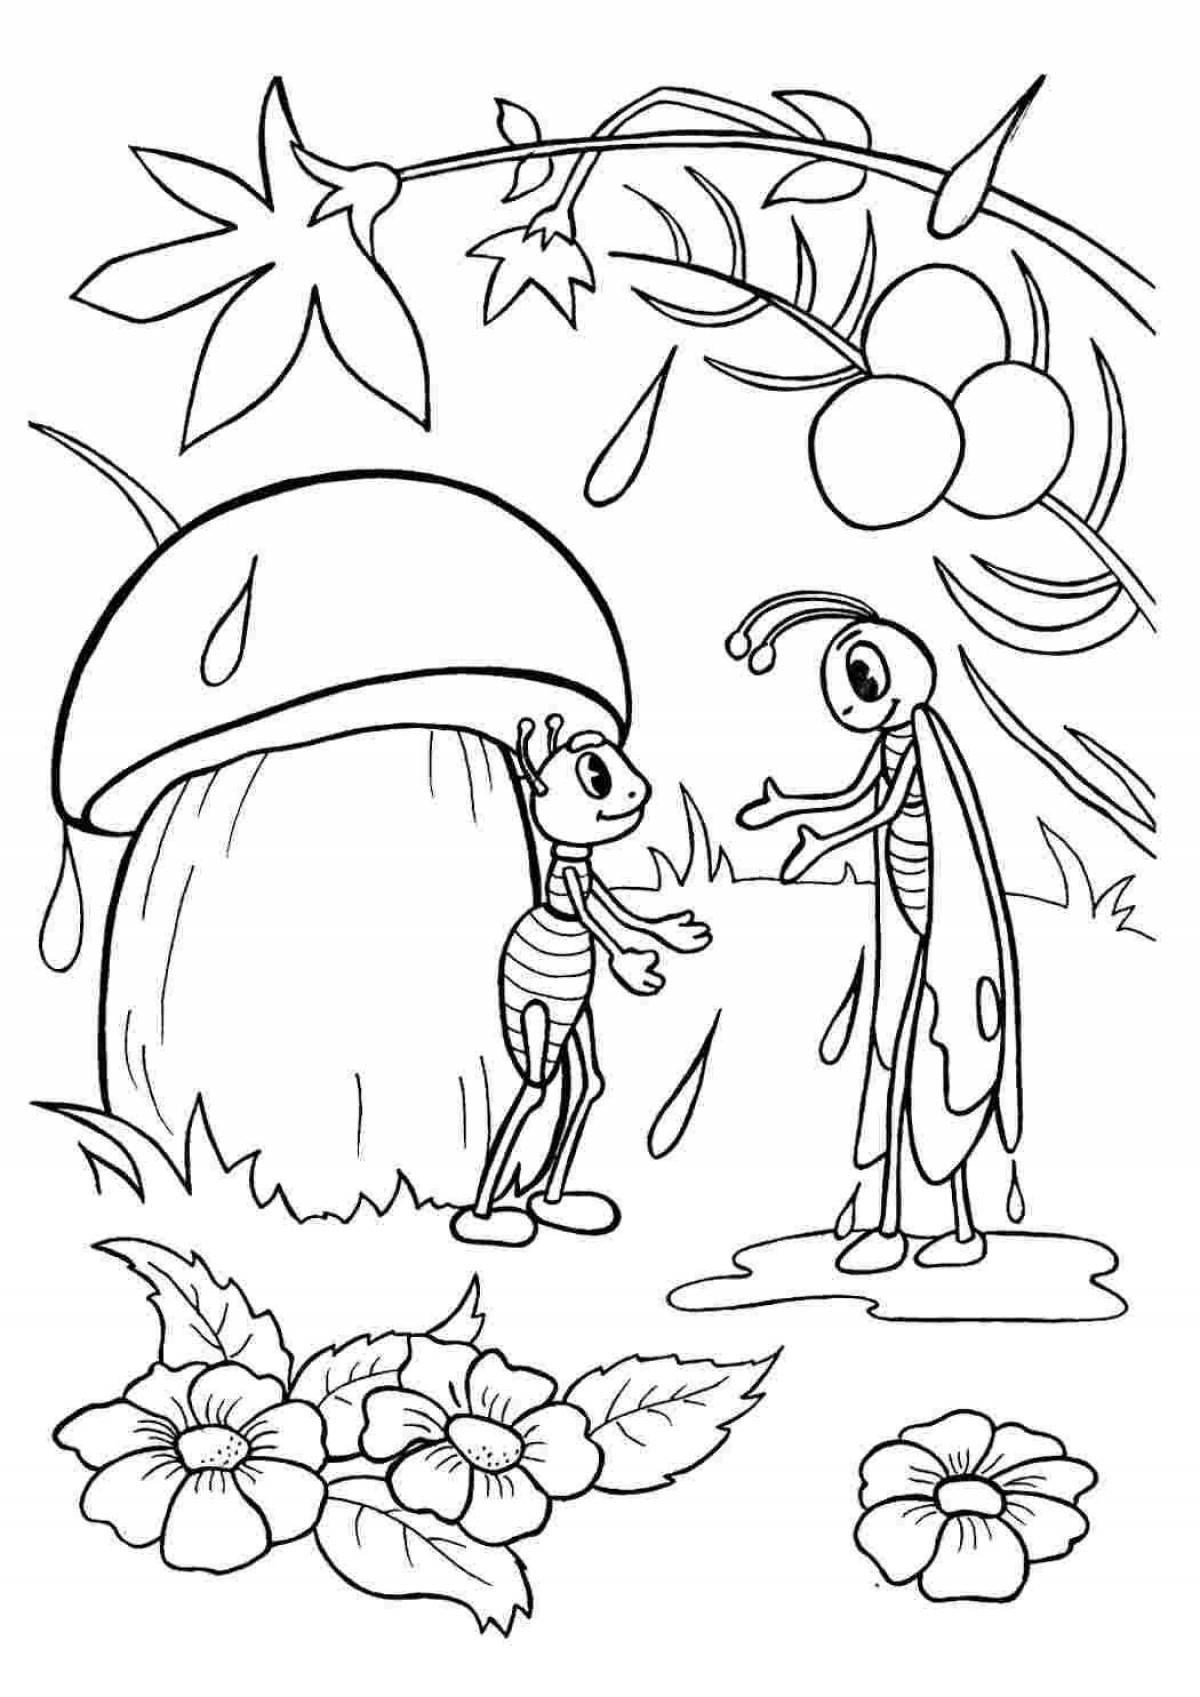 Magic coloring fairy tale under the mushroom